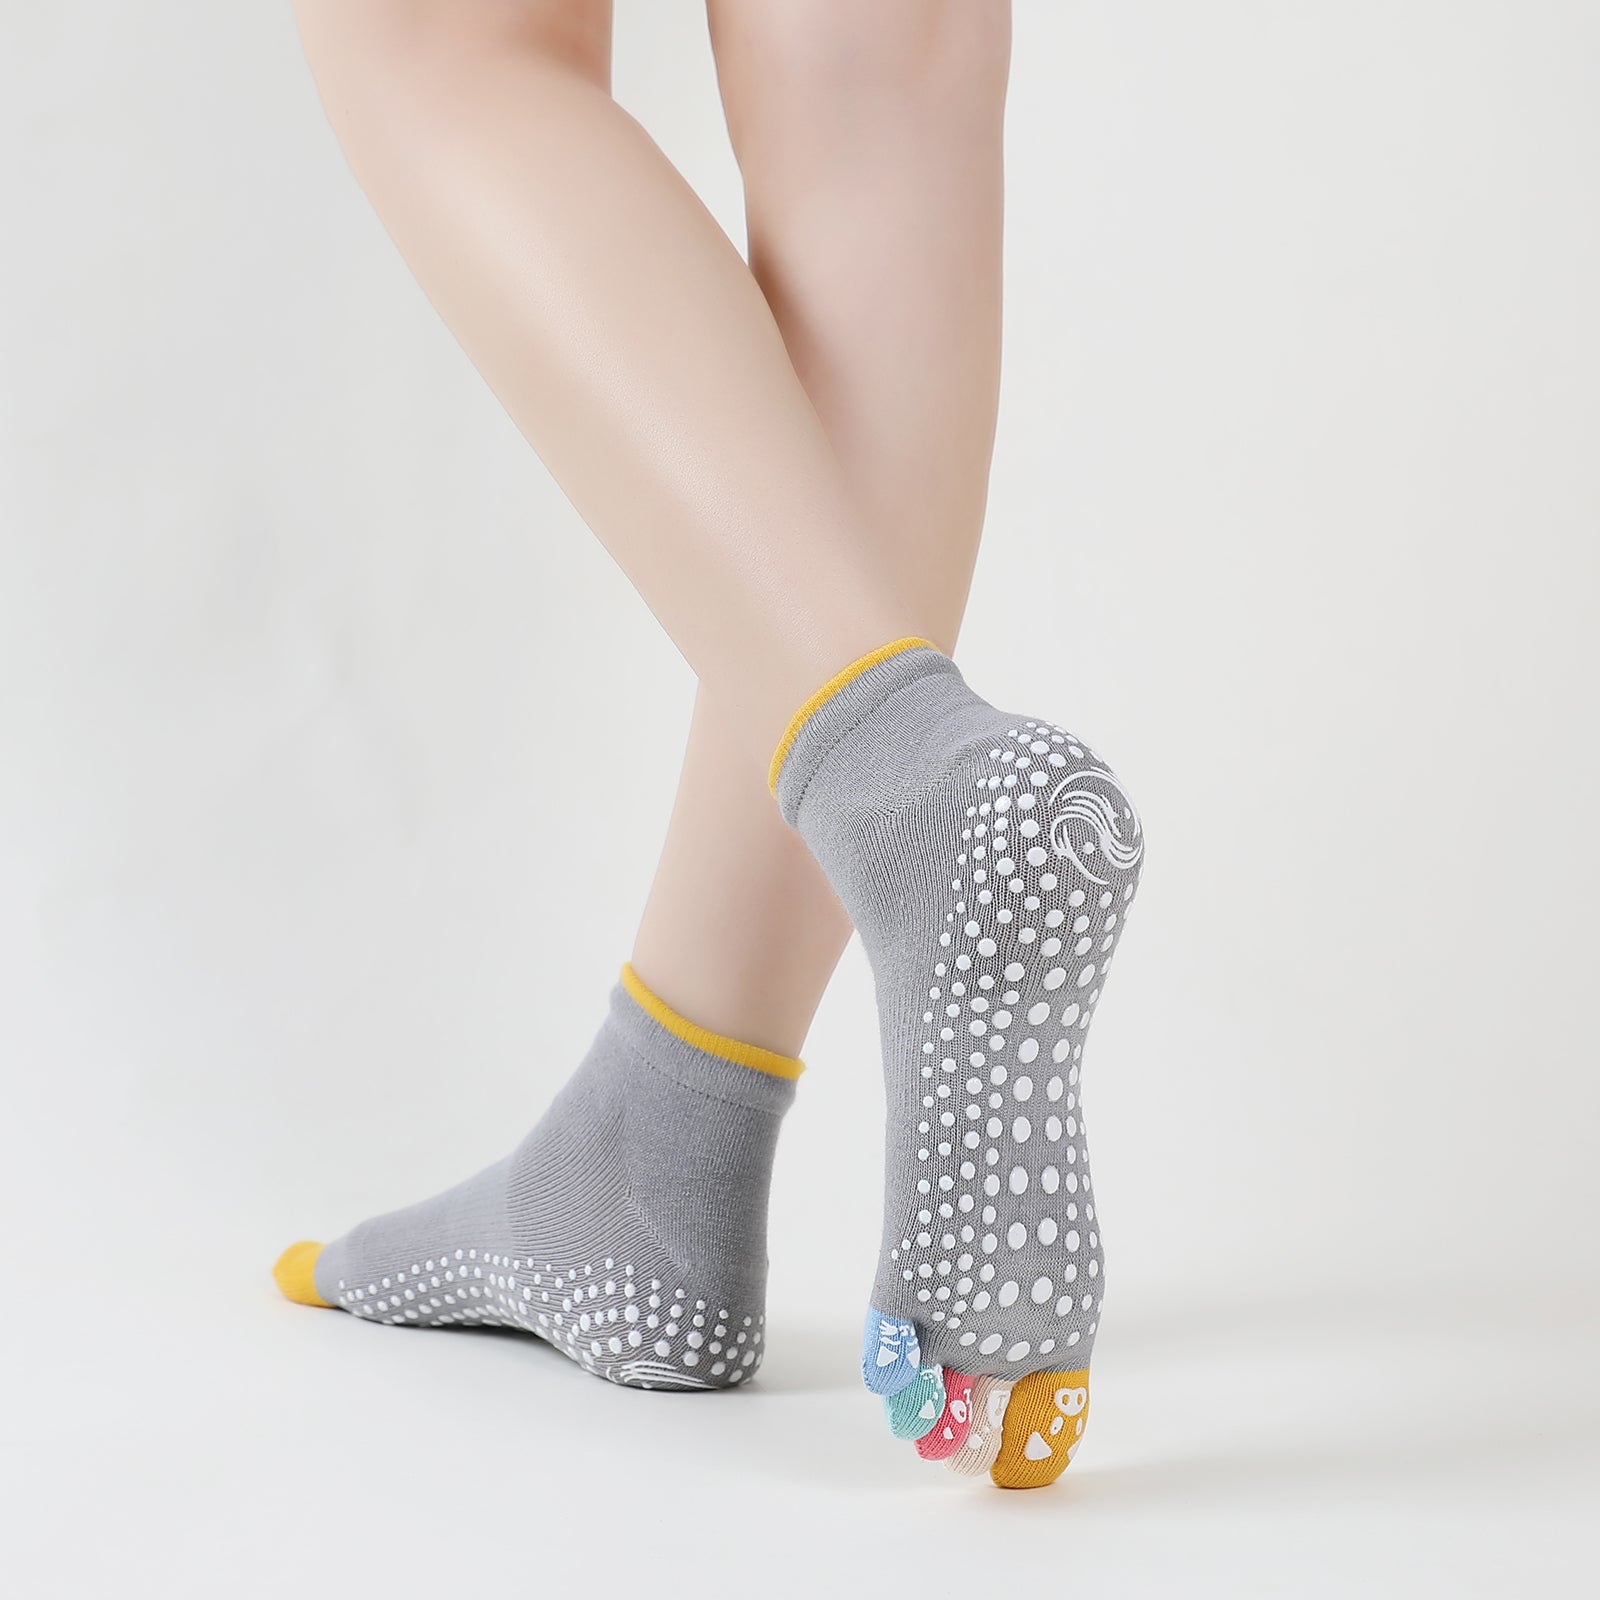 MIERSPORT Non-Slip Five Colorful Toe Yoga Socks - Pure Blue / 2